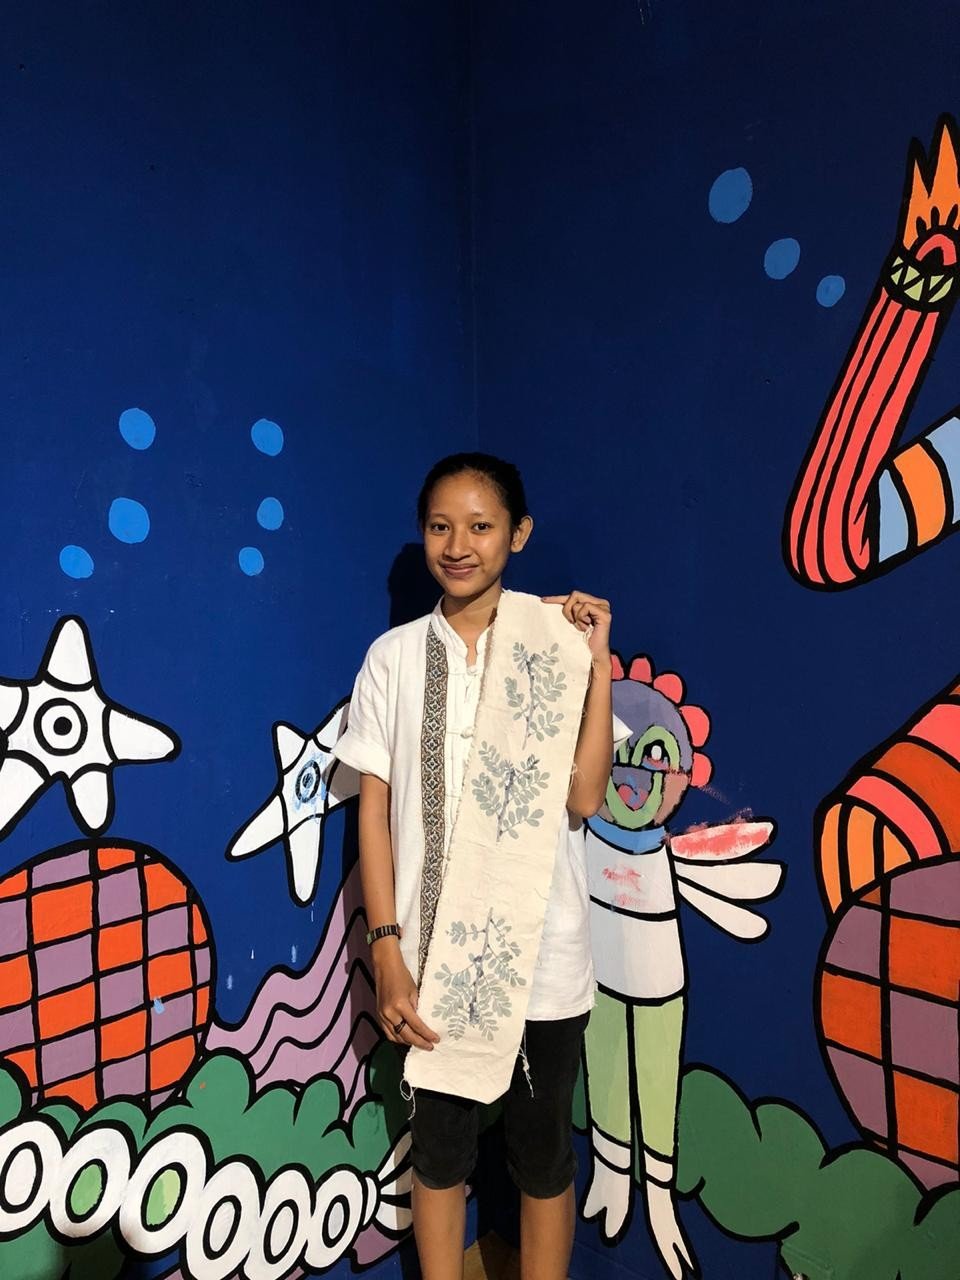 Kids Corner Biennale Jogja 2019. (Suara.com/Kintan Sekarwangi)